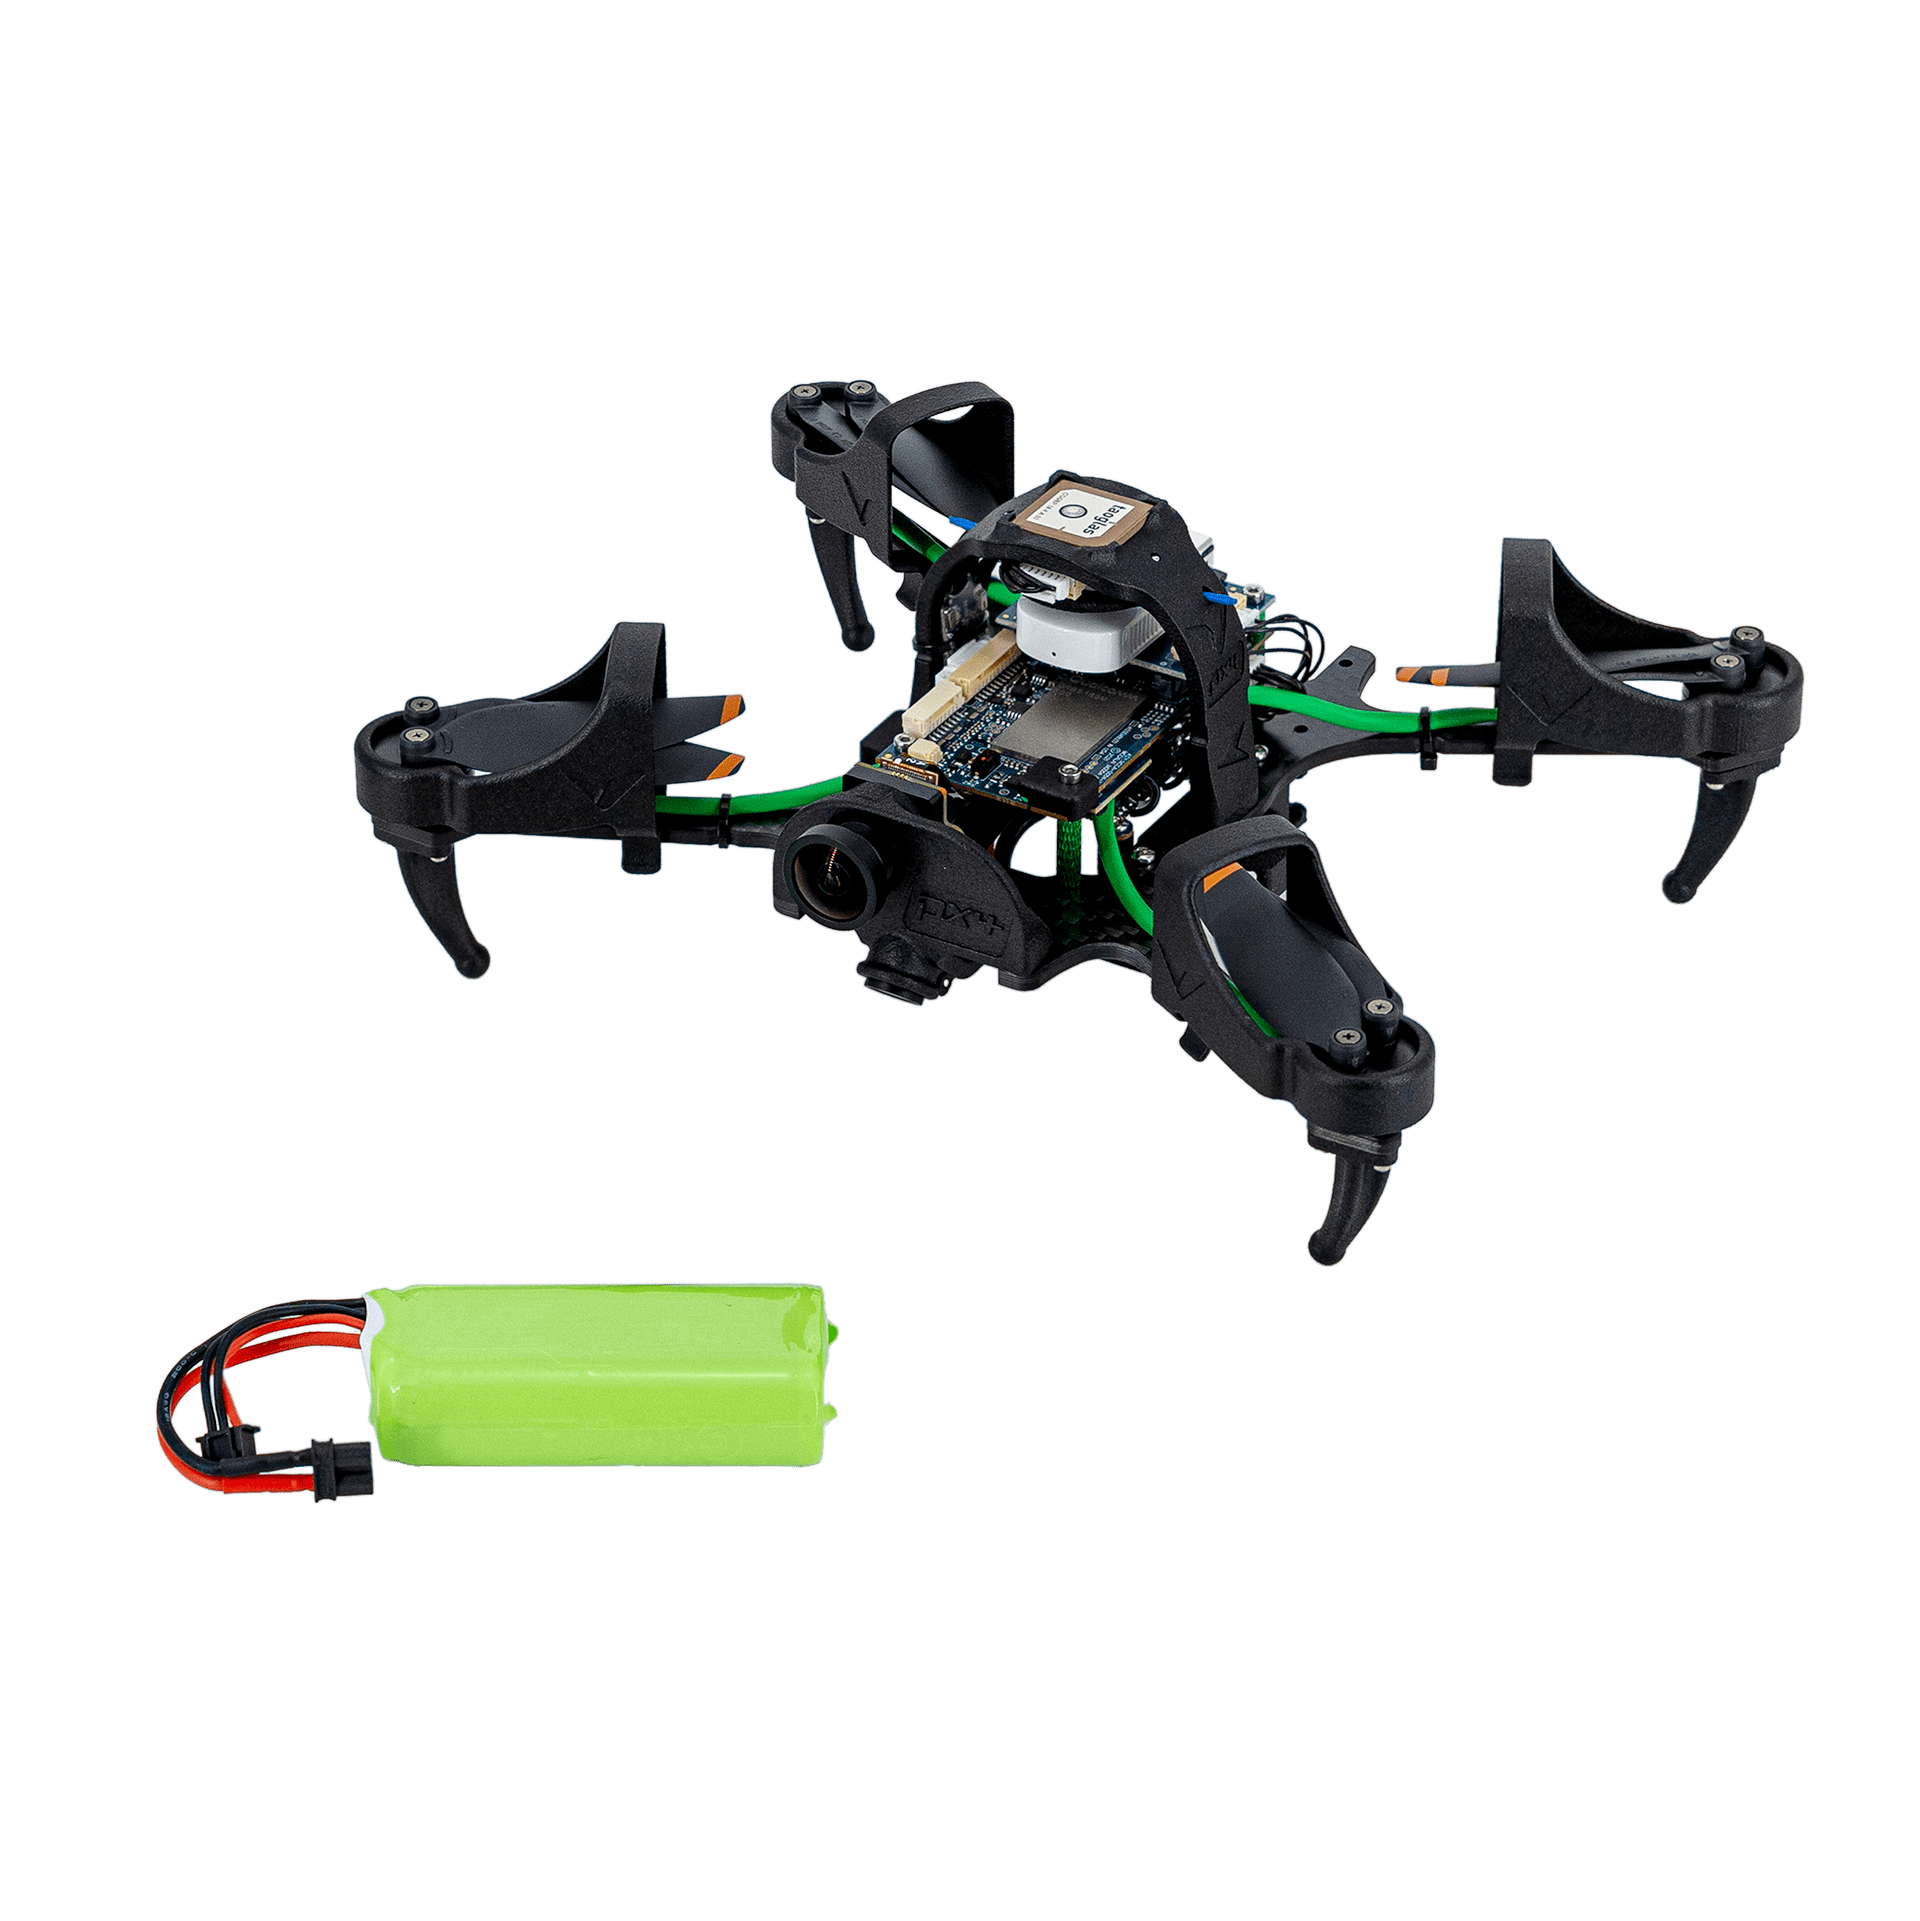 ModalAI, Inc. Drone with Battery PX4 Autonomy Developer Kit